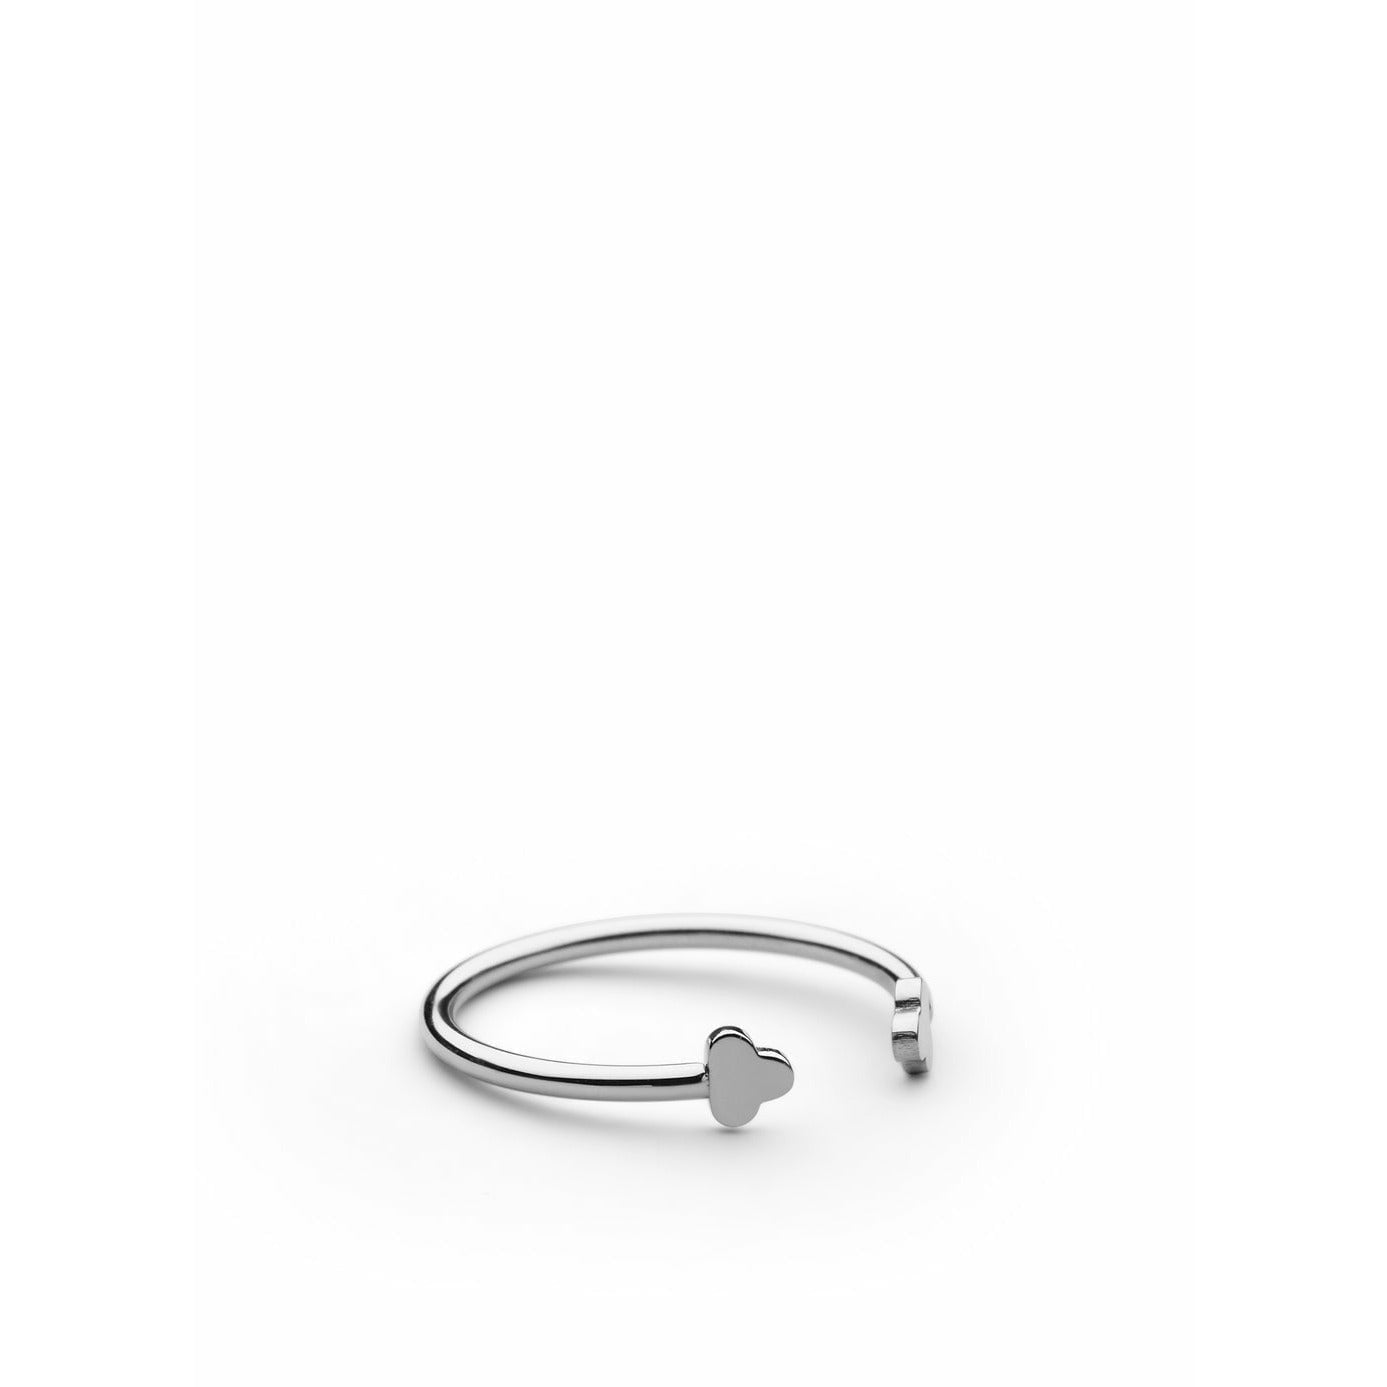 Skultuna Open Key Ring Small Polished Steel, ø1,6 Cm